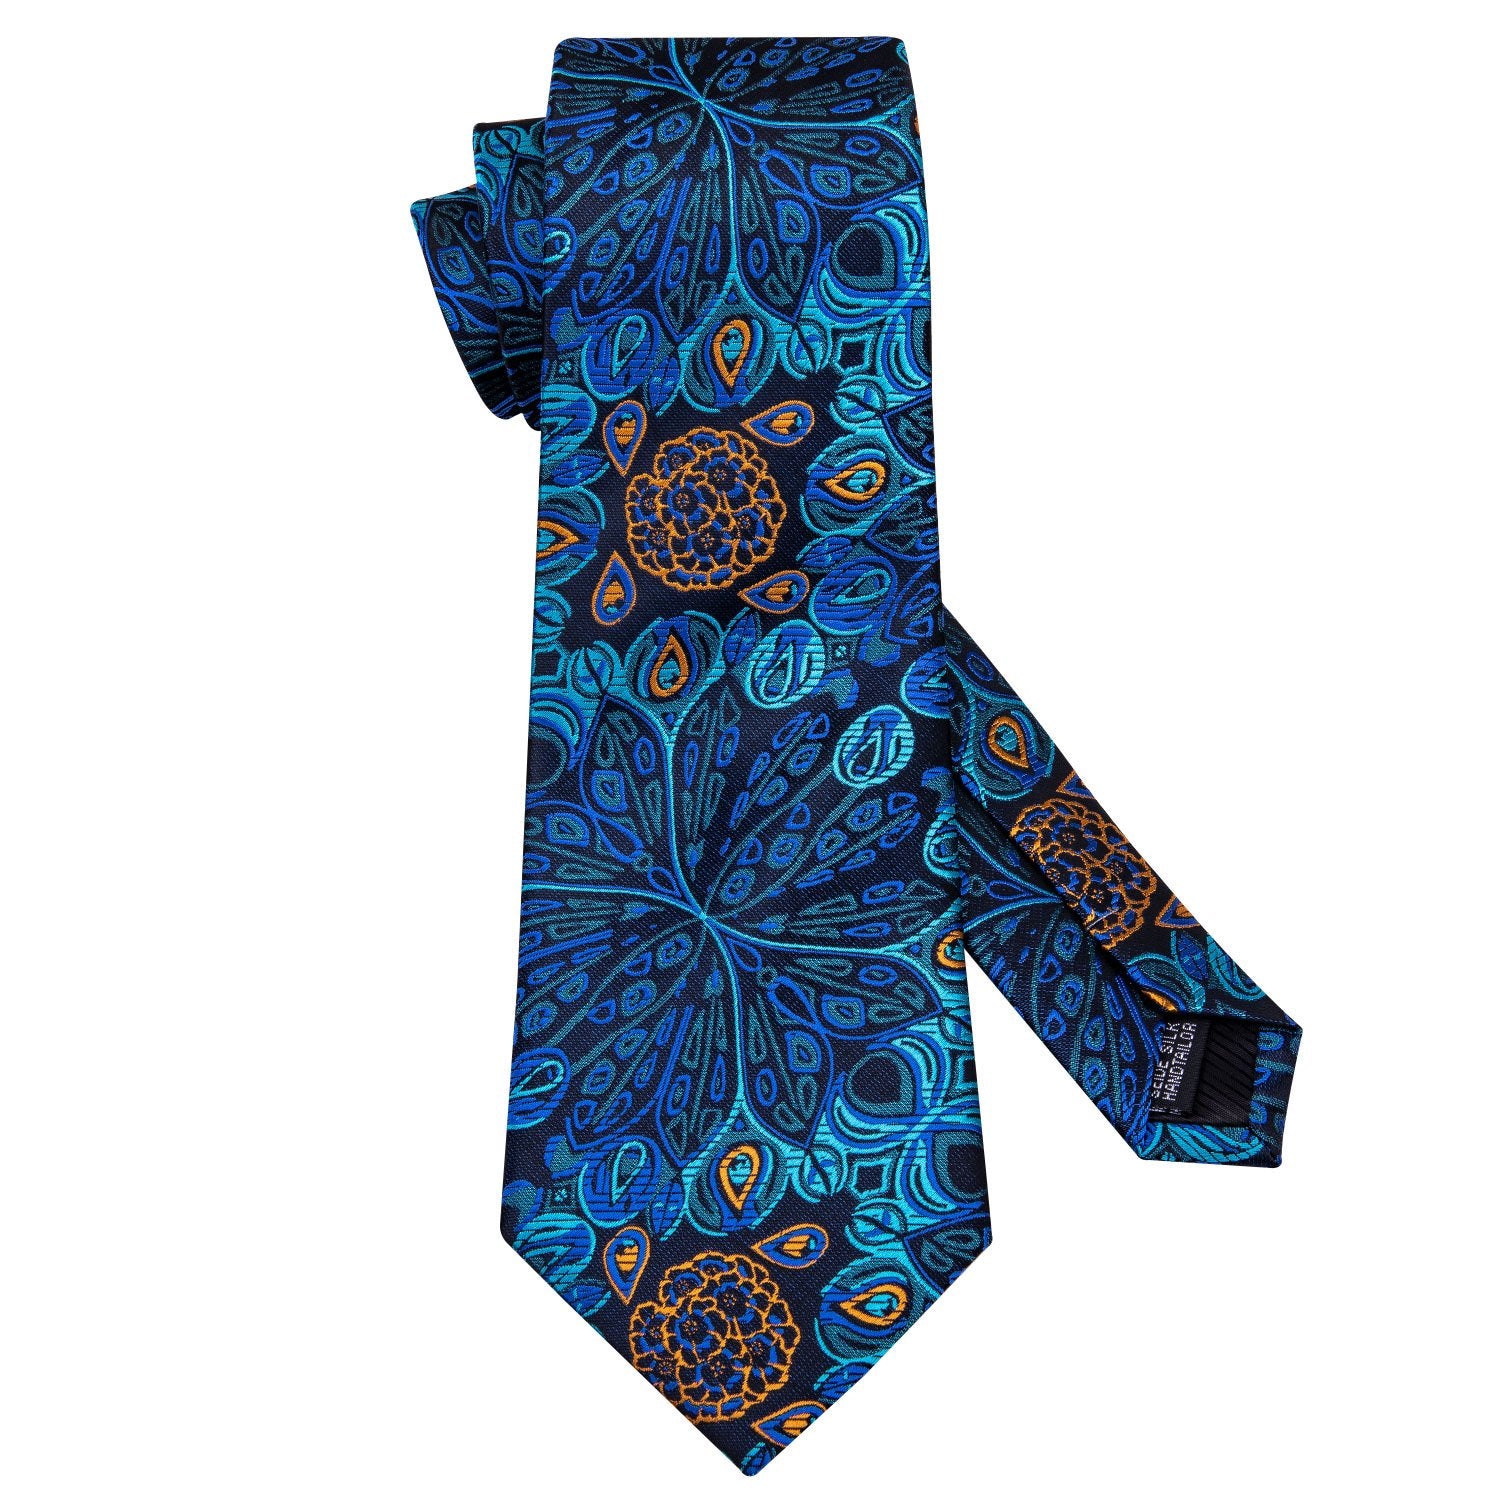 Fantastic Blue Floral Men's Tie Lapel Pin Brooch Silk Tie Pocket Square Cufflinks Set Wedding Business Party